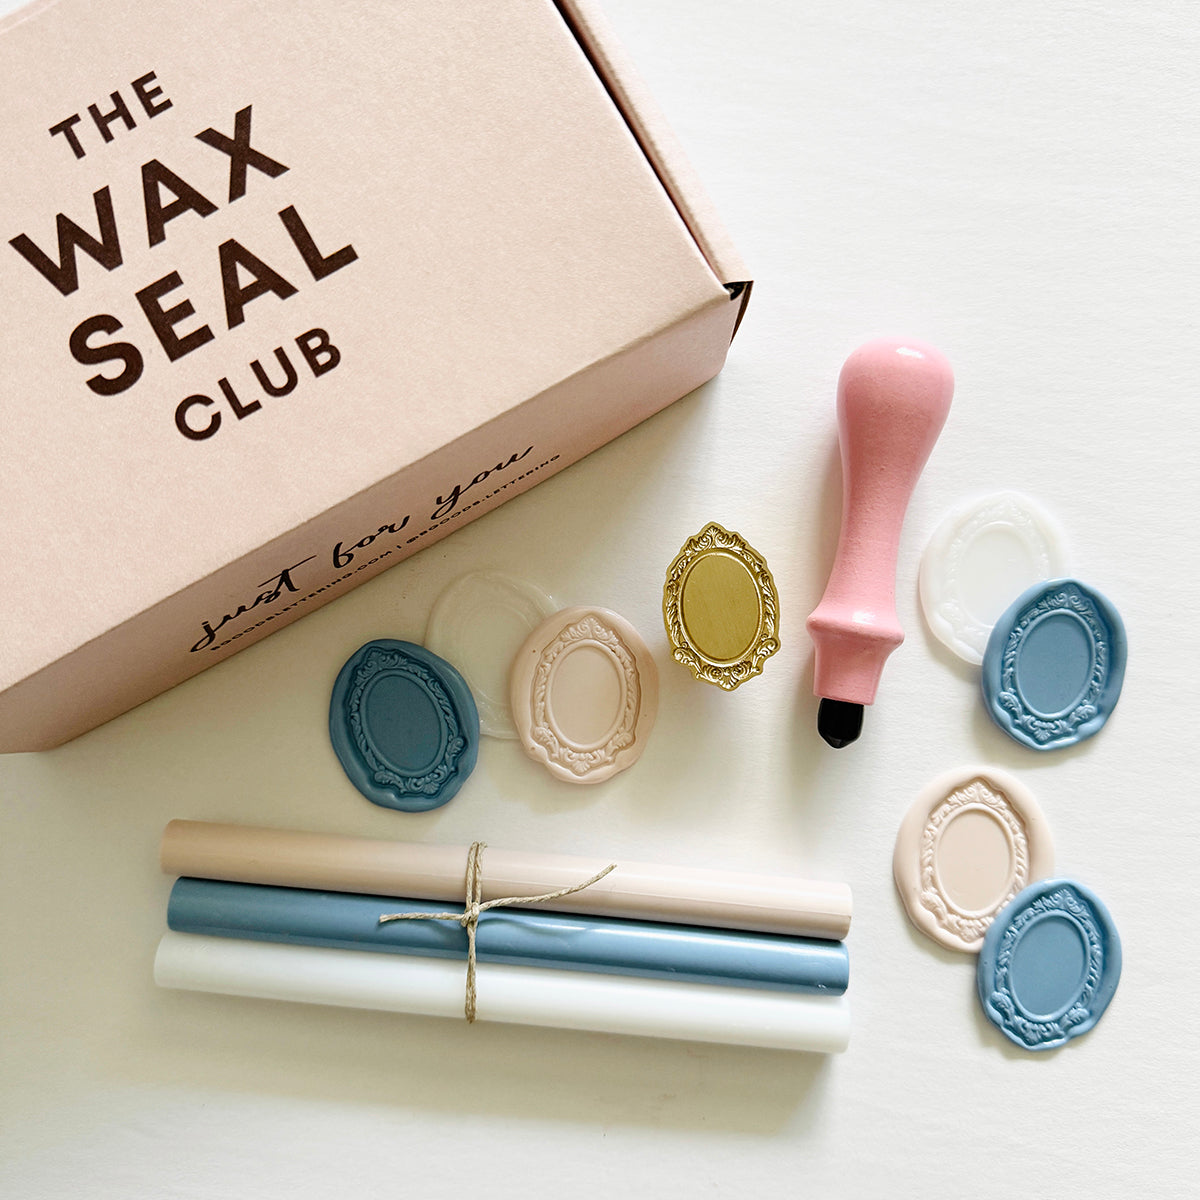 The Wax Seal Club Subscription Box